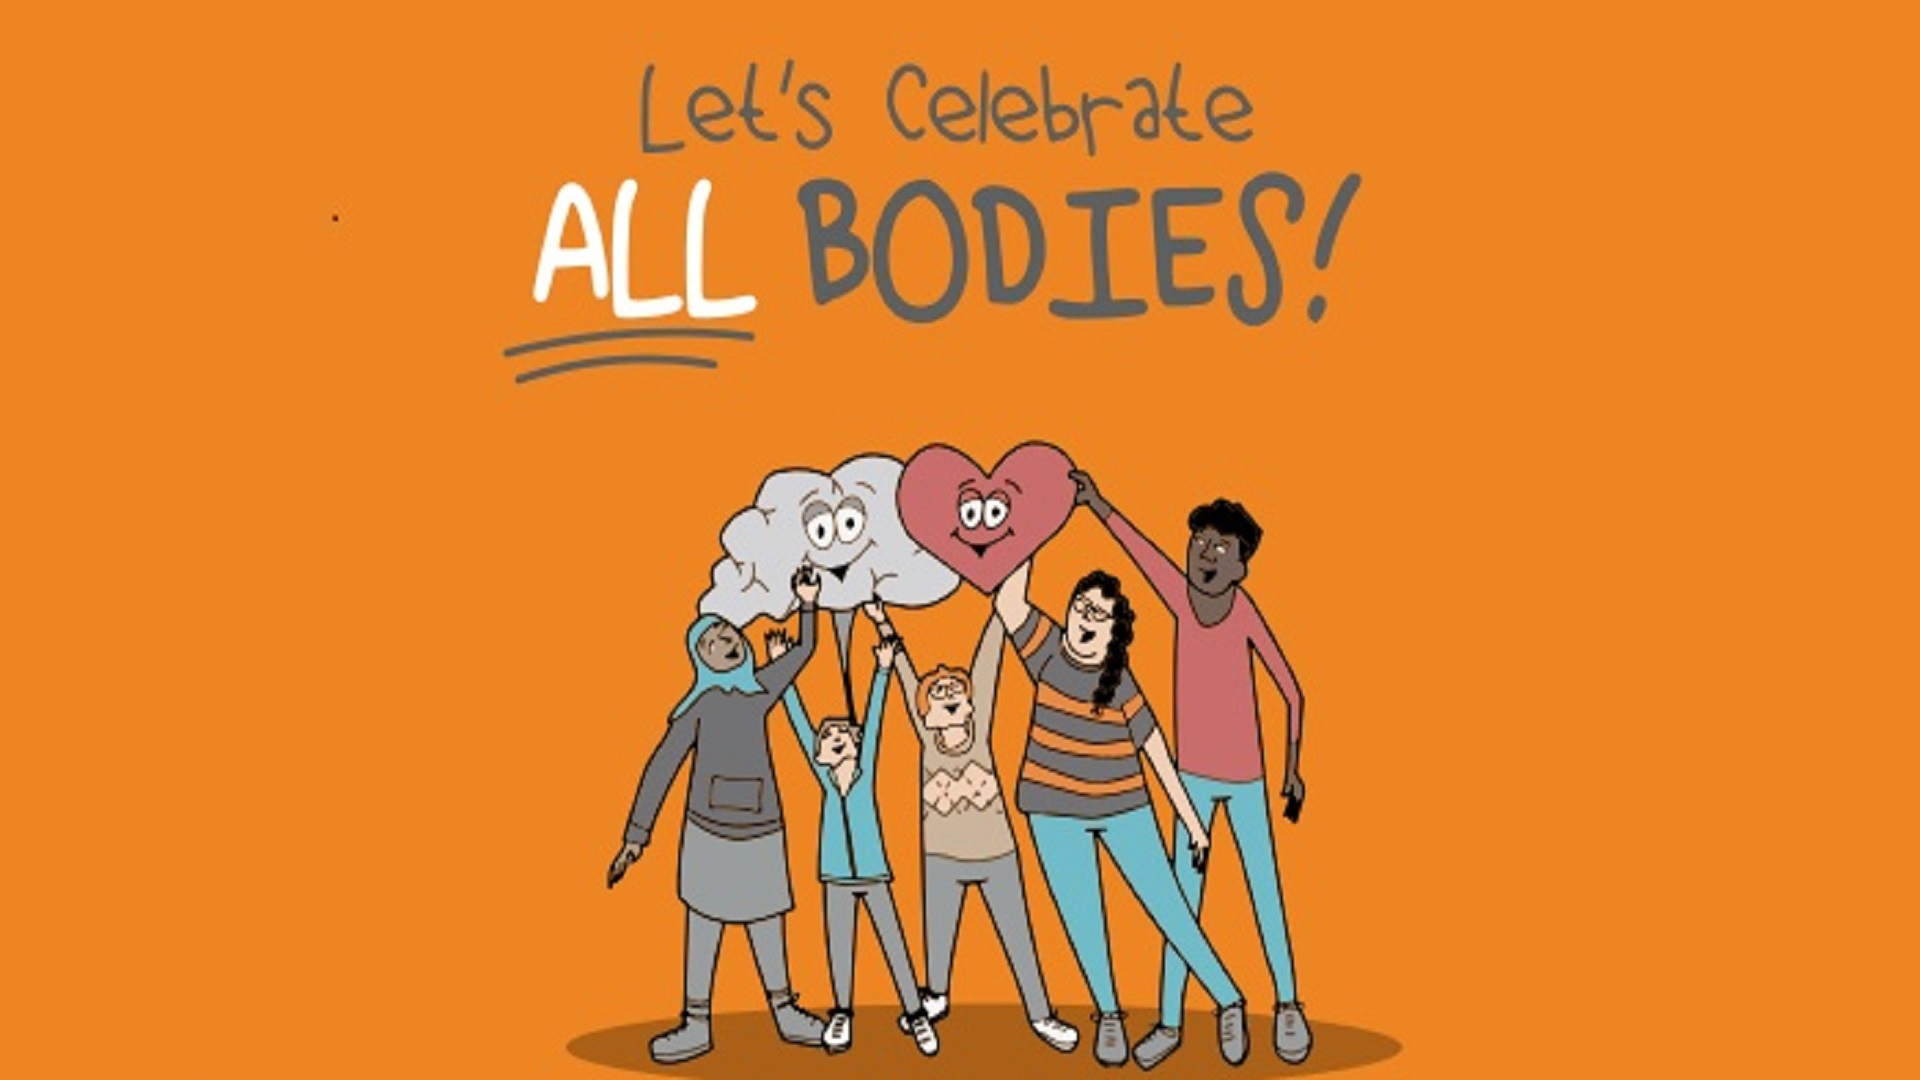 'Let's celebrate all bodies' cover illustration